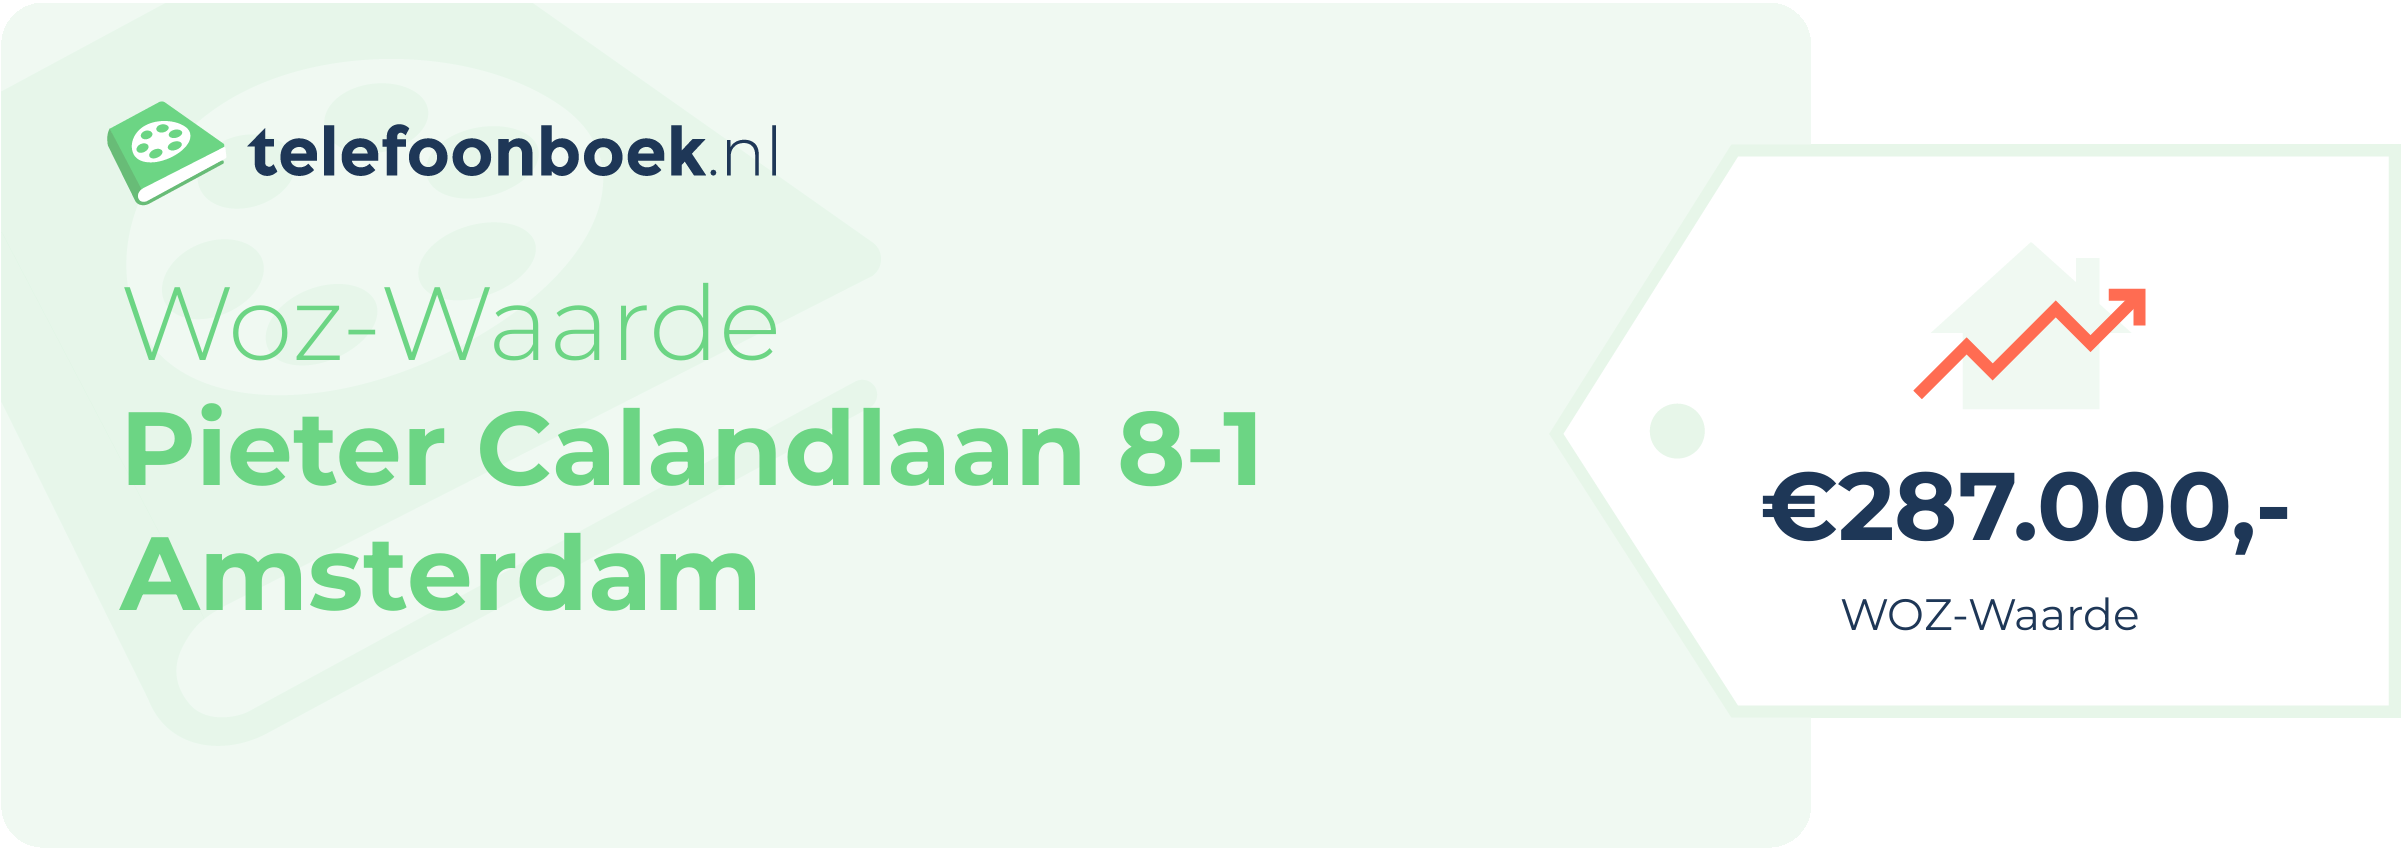 WOZ-waarde Pieter Calandlaan 8-1 Amsterdam